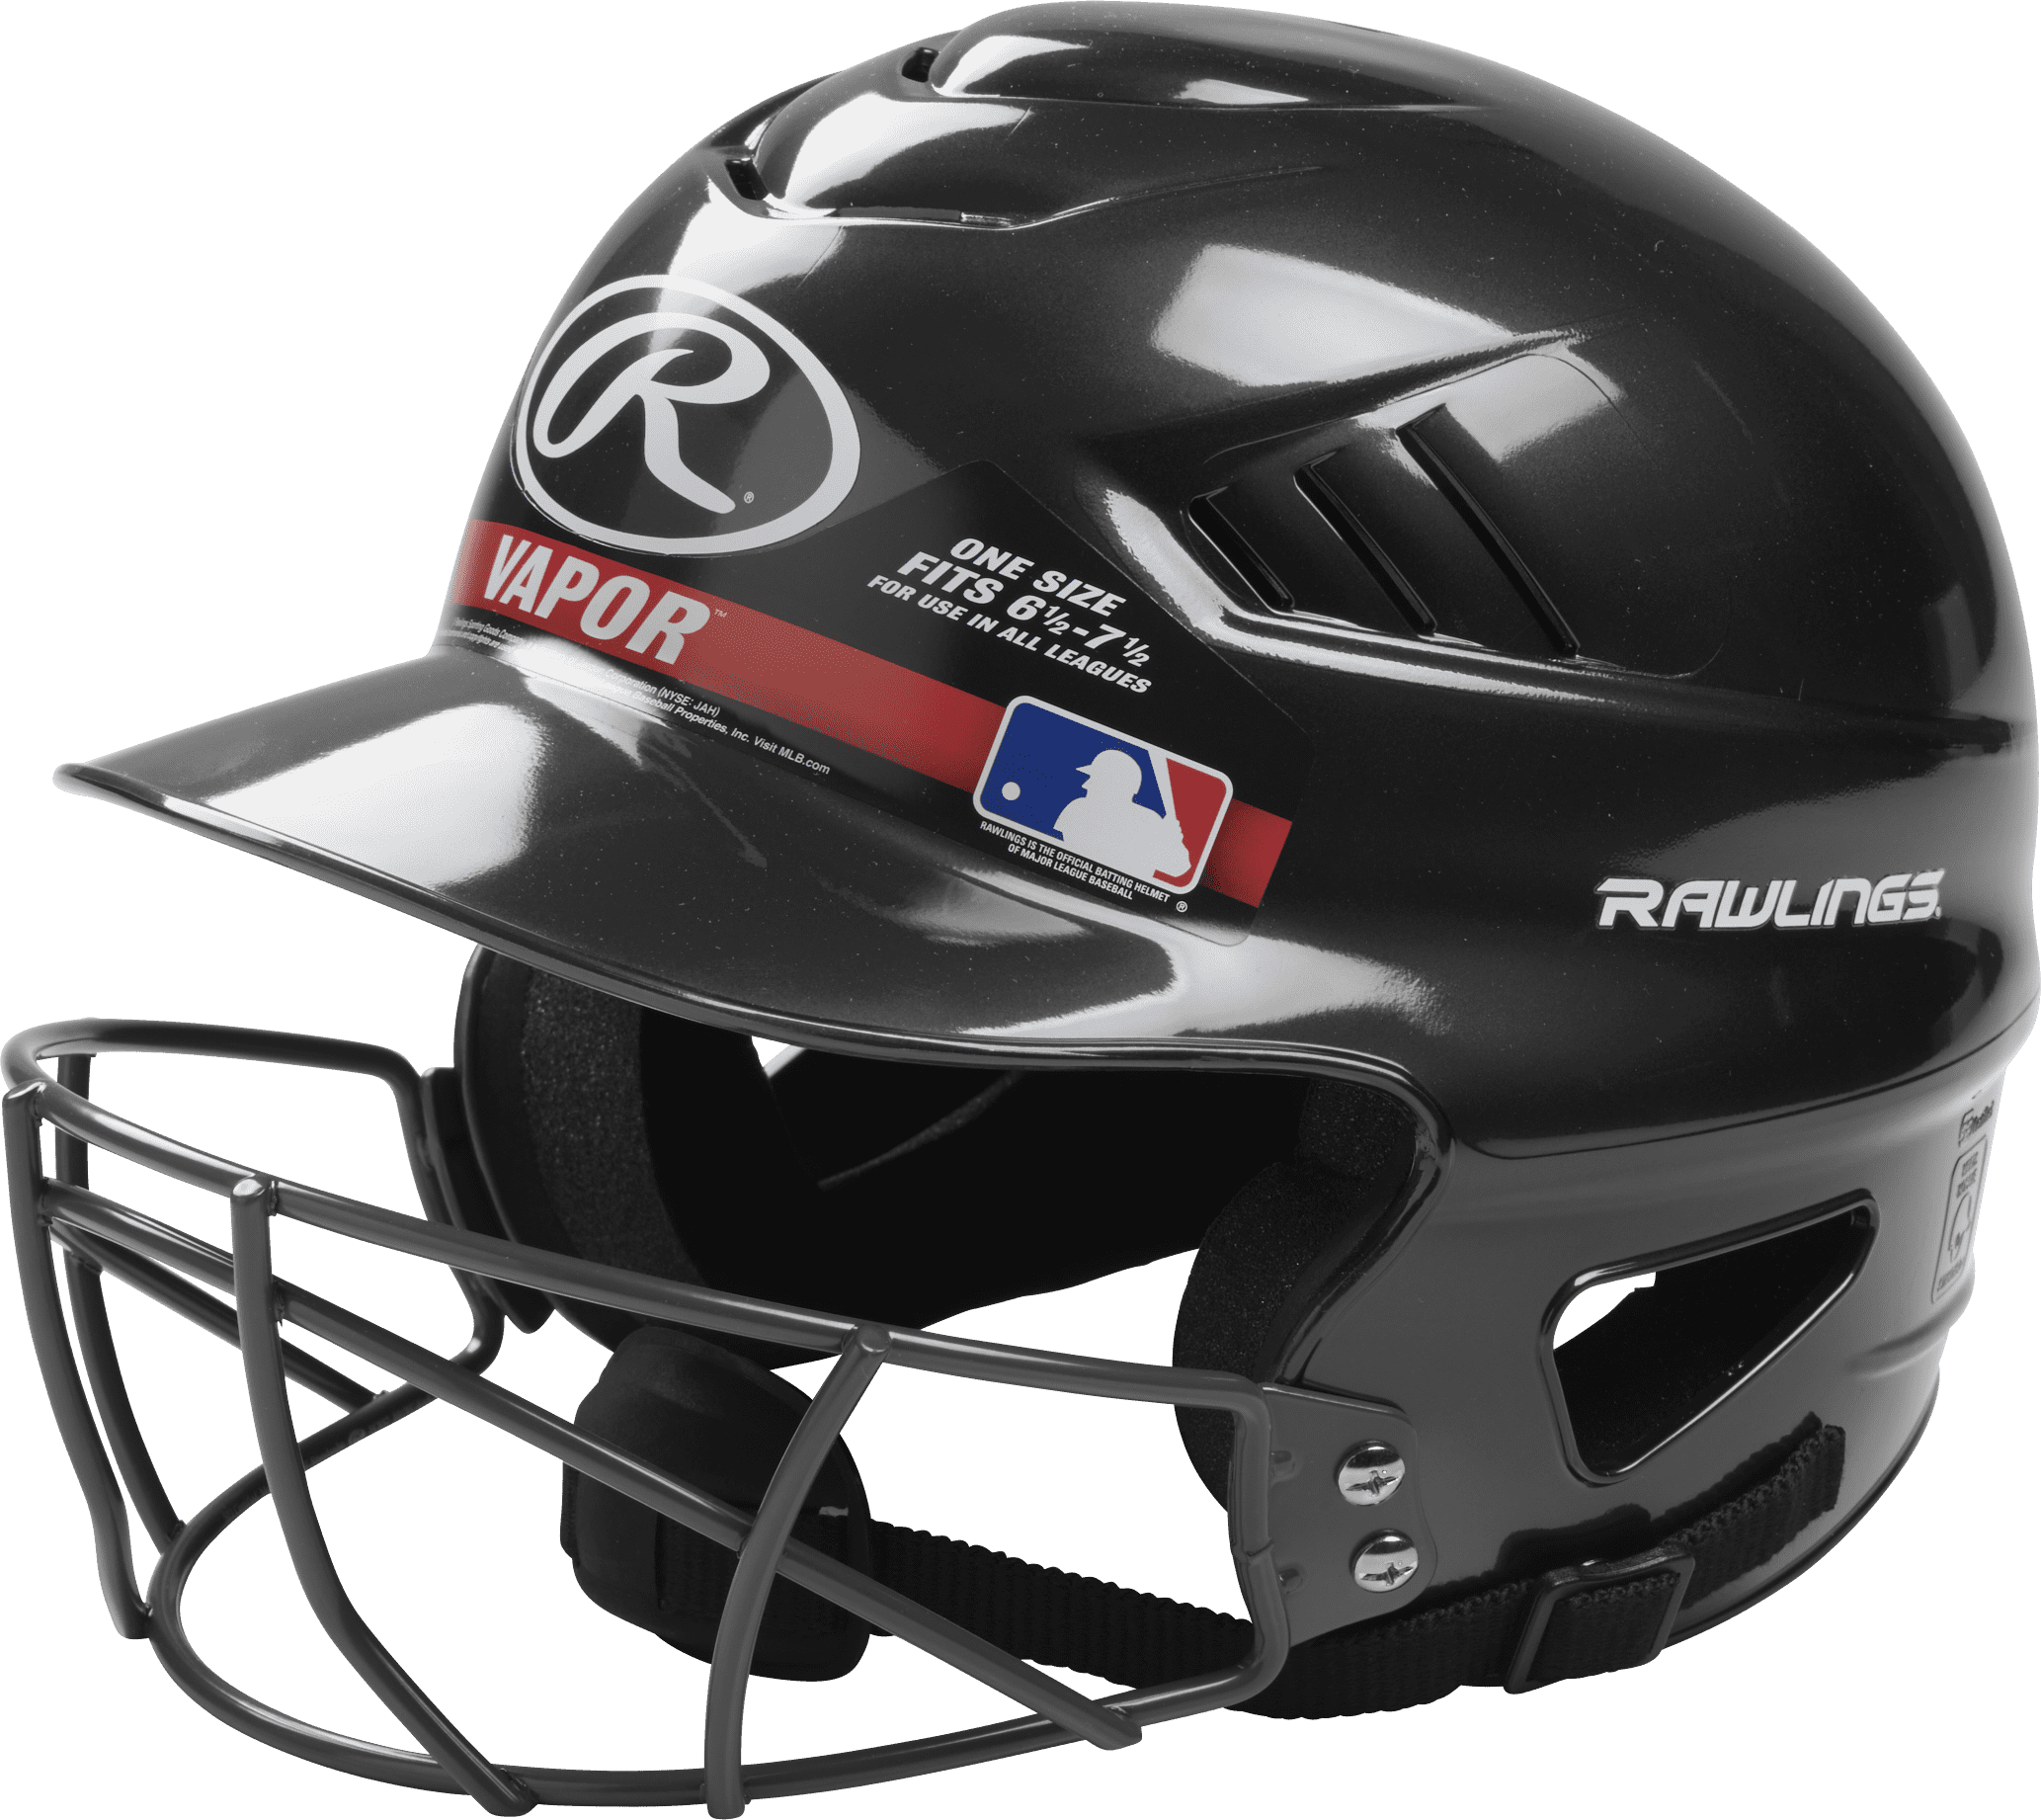 3 Rawlings Bb1wg Baseball Softball Batting Helmet Face Guard for sale online 